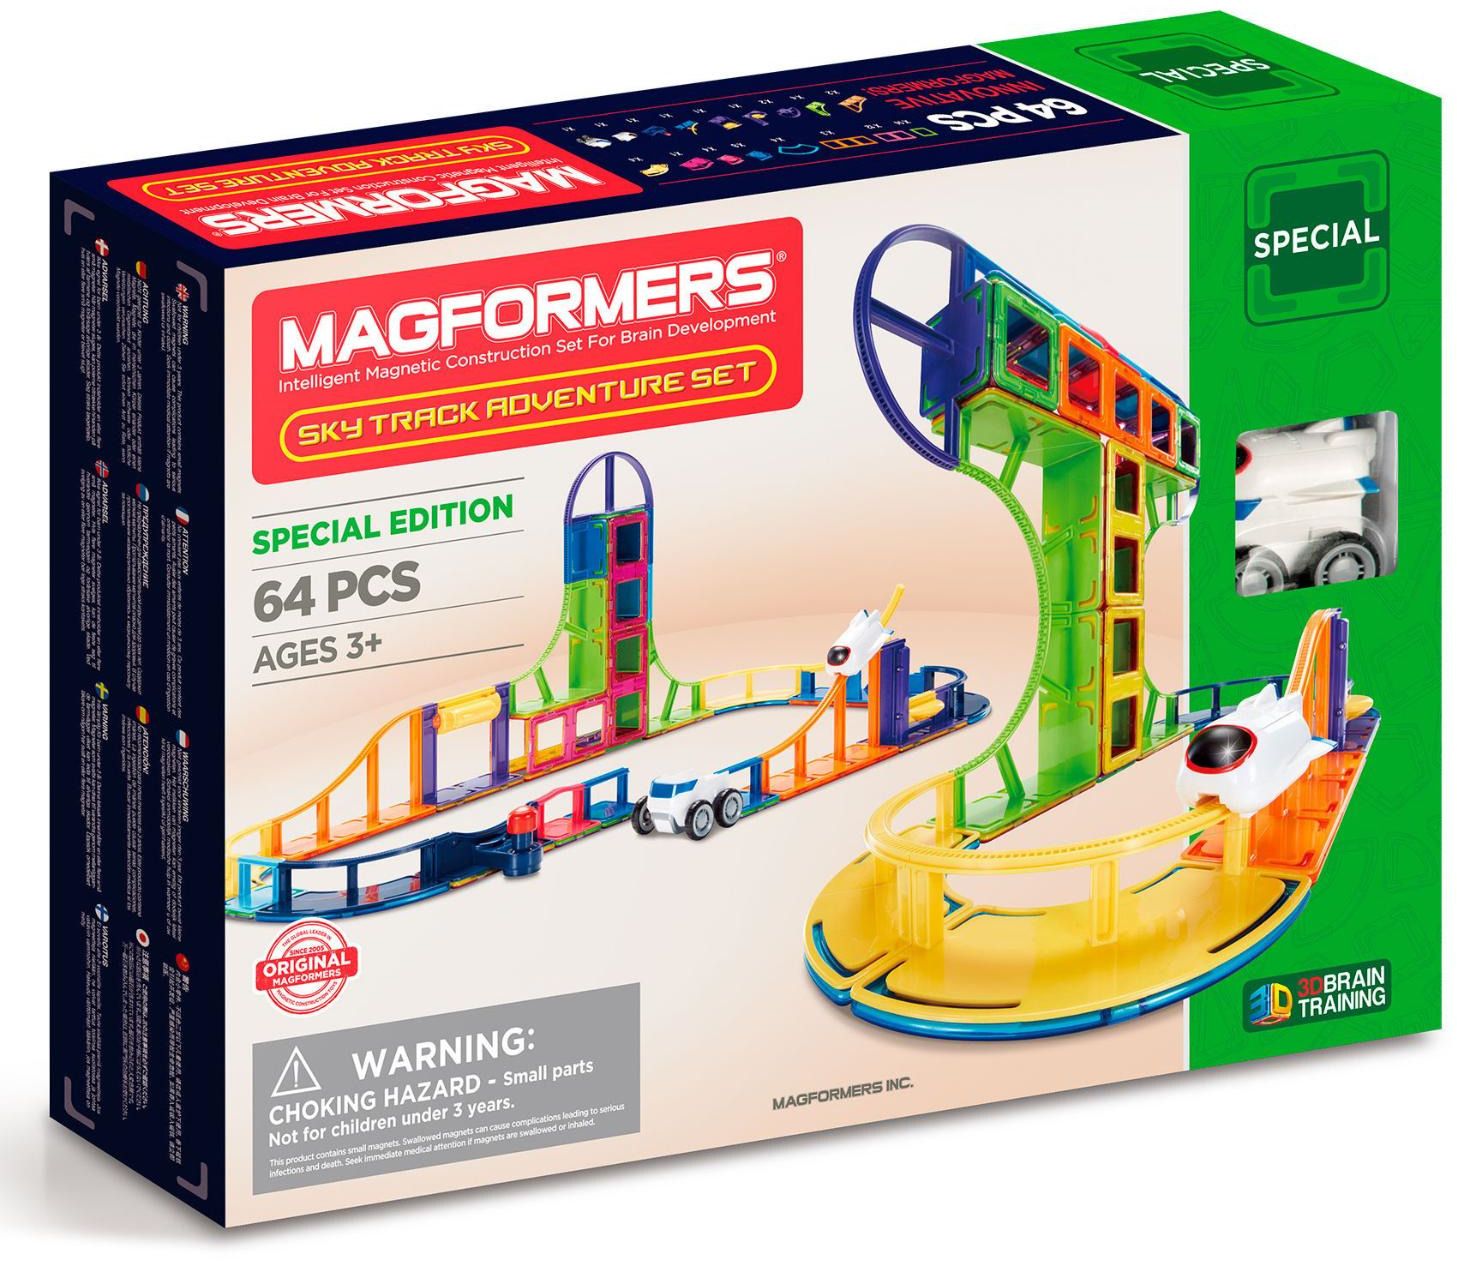   Magformers Sky Track Adventure Set